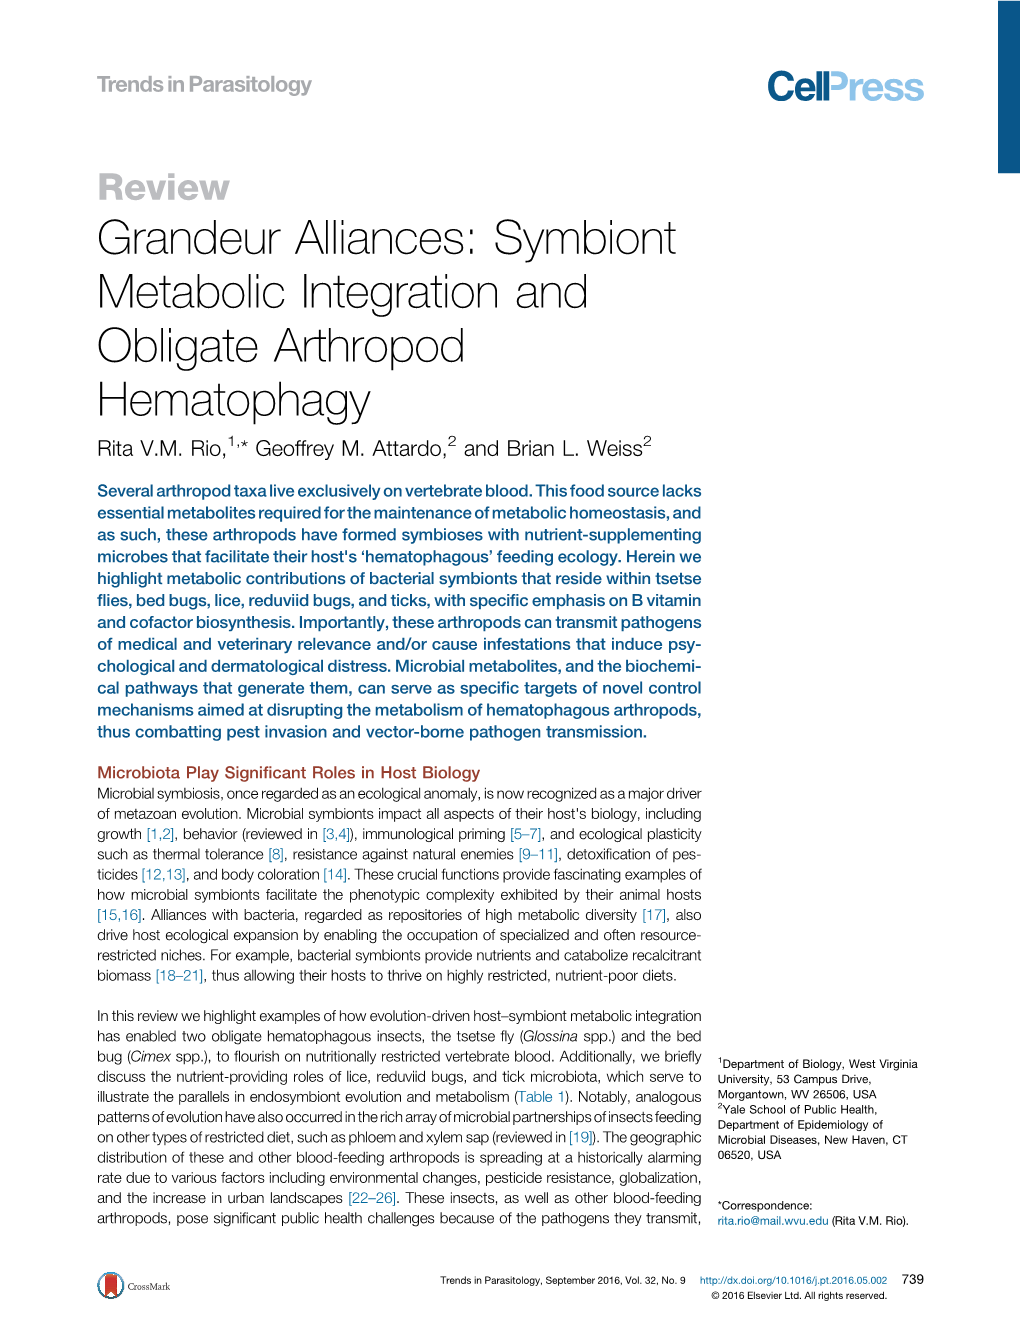 Symbiont Metabolic Integration and Obligate Arthropod